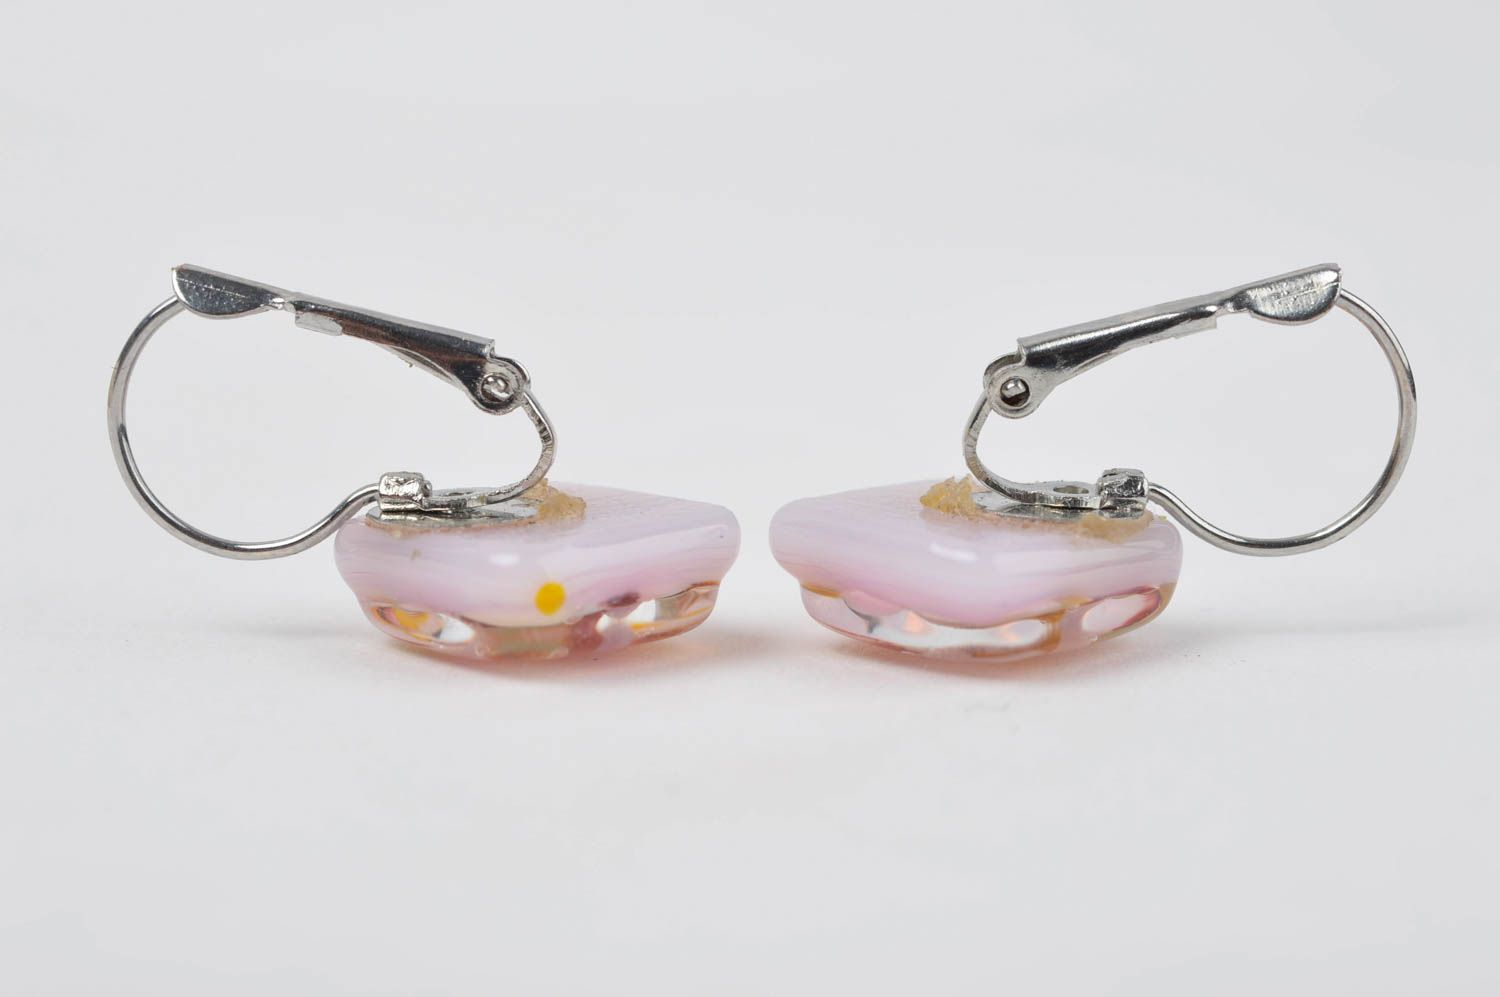 Unusual handmade glass earrings artisan jewelry designs accessories for girls photo 2